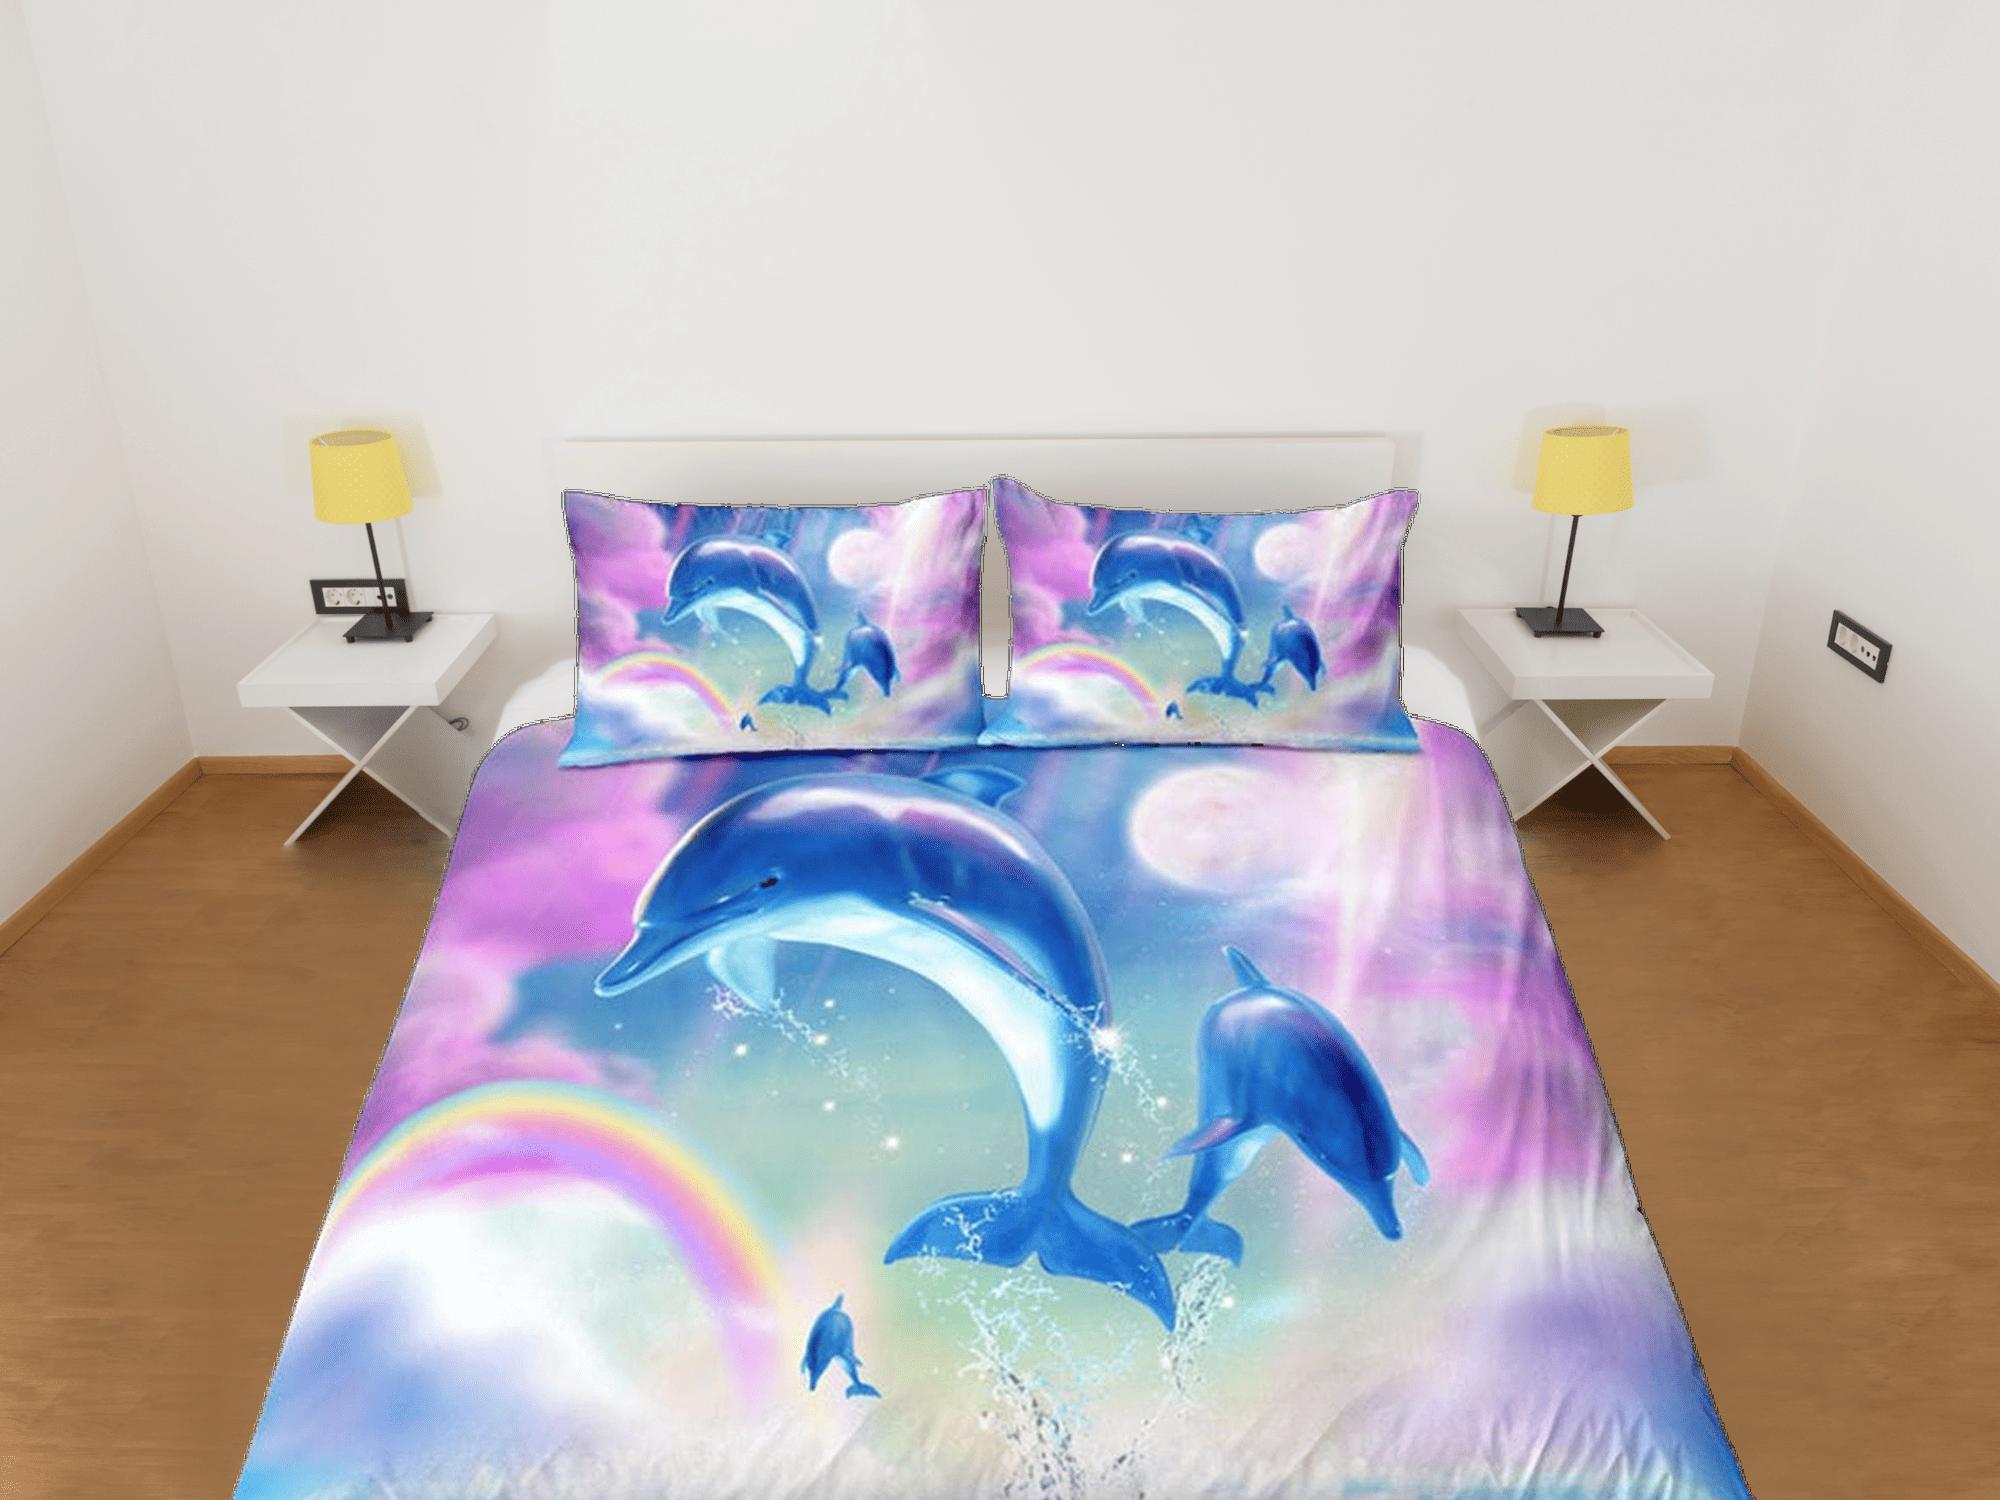 daintyduvet Rainbow & jumping dolphin bedding pink blue duvet cover, ocean blush decor bottle nose dolphin bedding set full king queen, dorm bedding